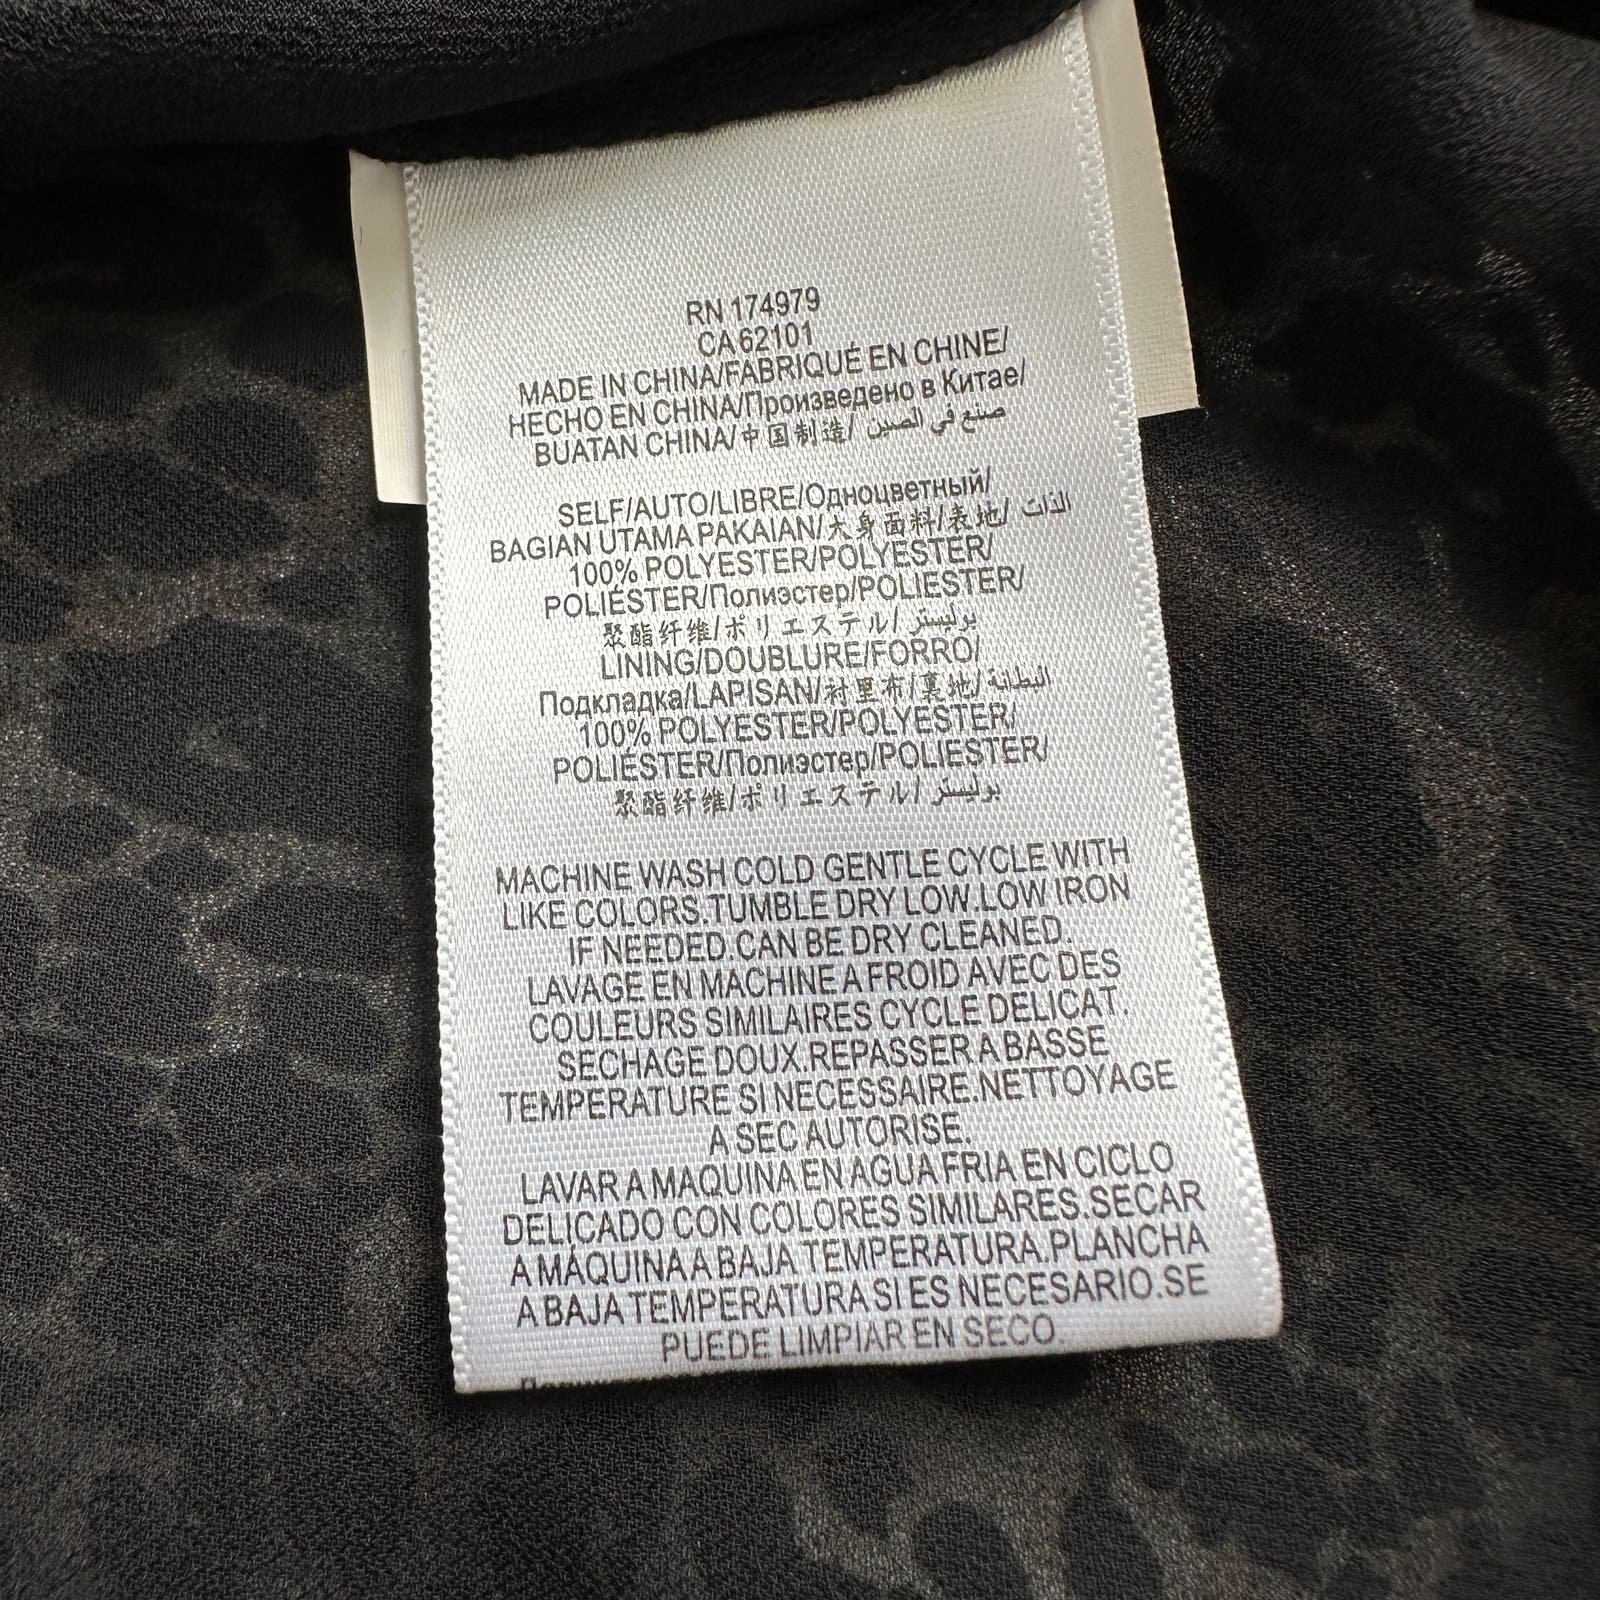 cheapest place to buy  BCBGMaxAzria Leopard Print Midi Skirt Size XS IRXPxrJKn online store